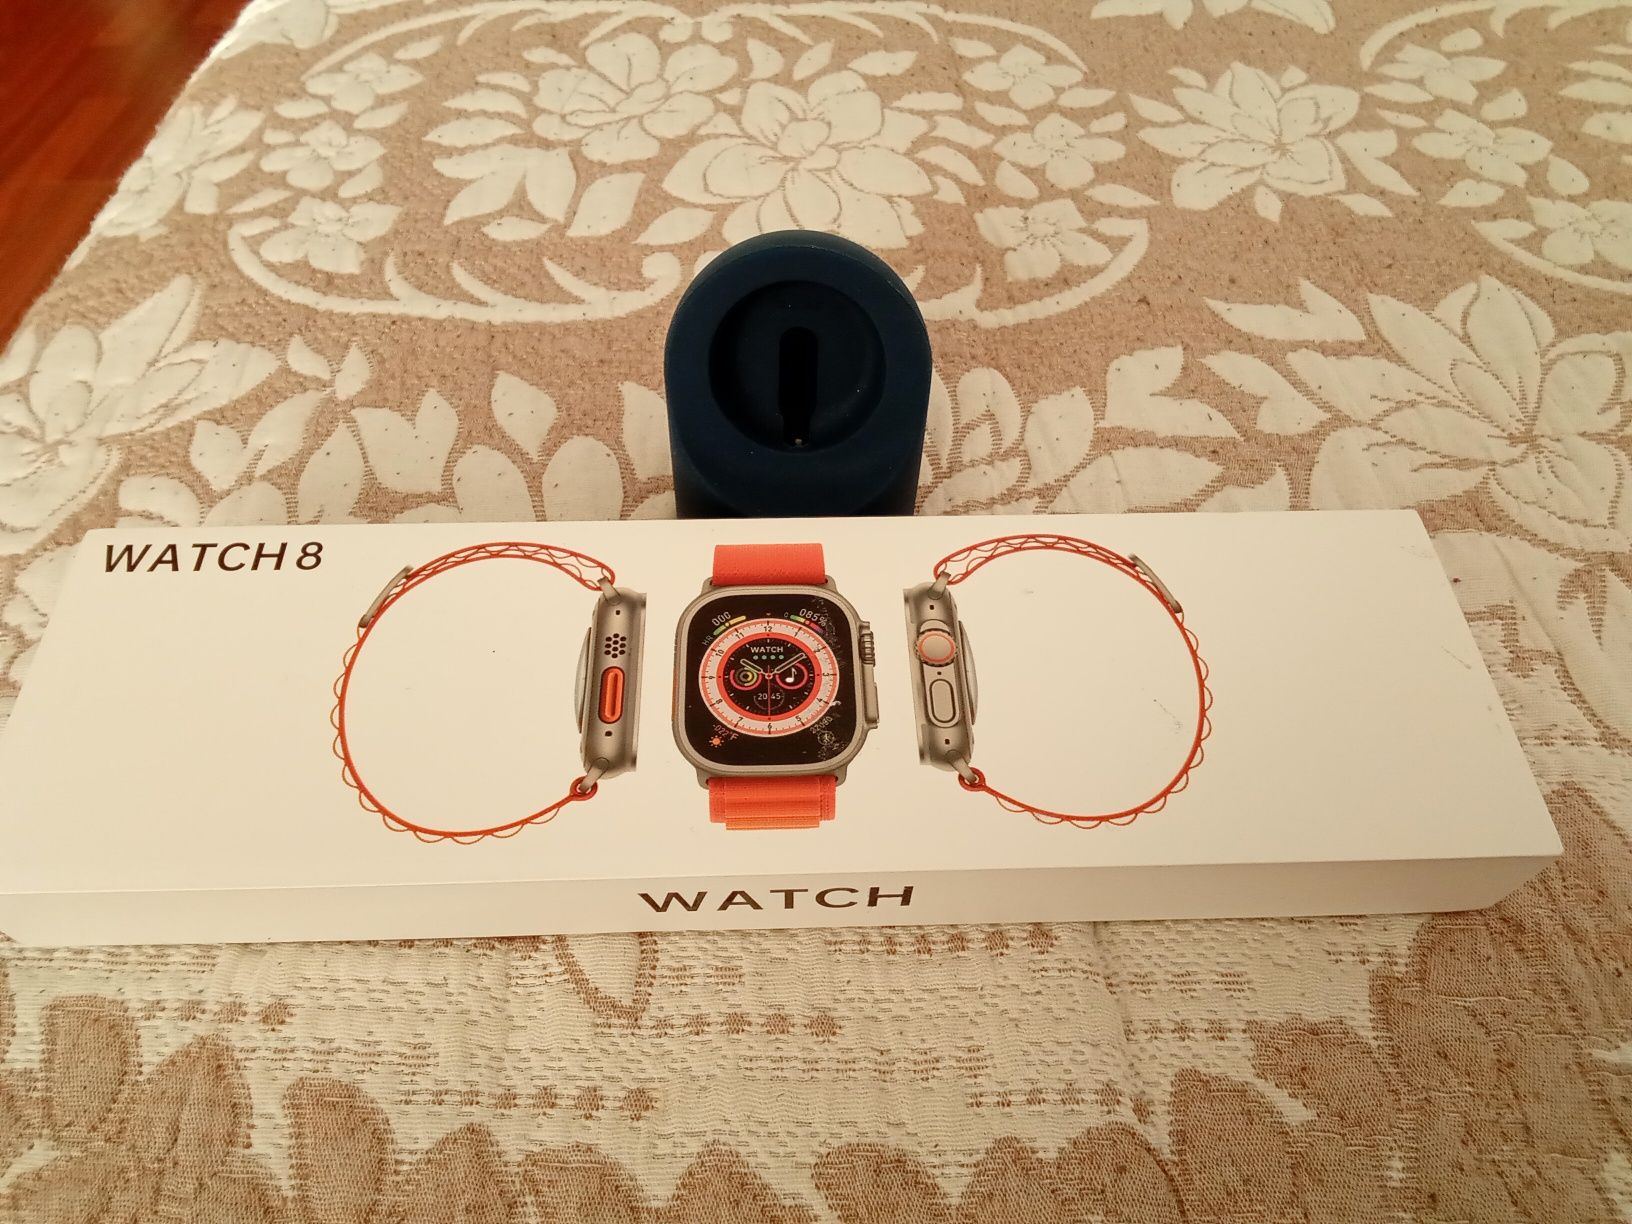 Vand Smartwatch 8 + suport incarcare